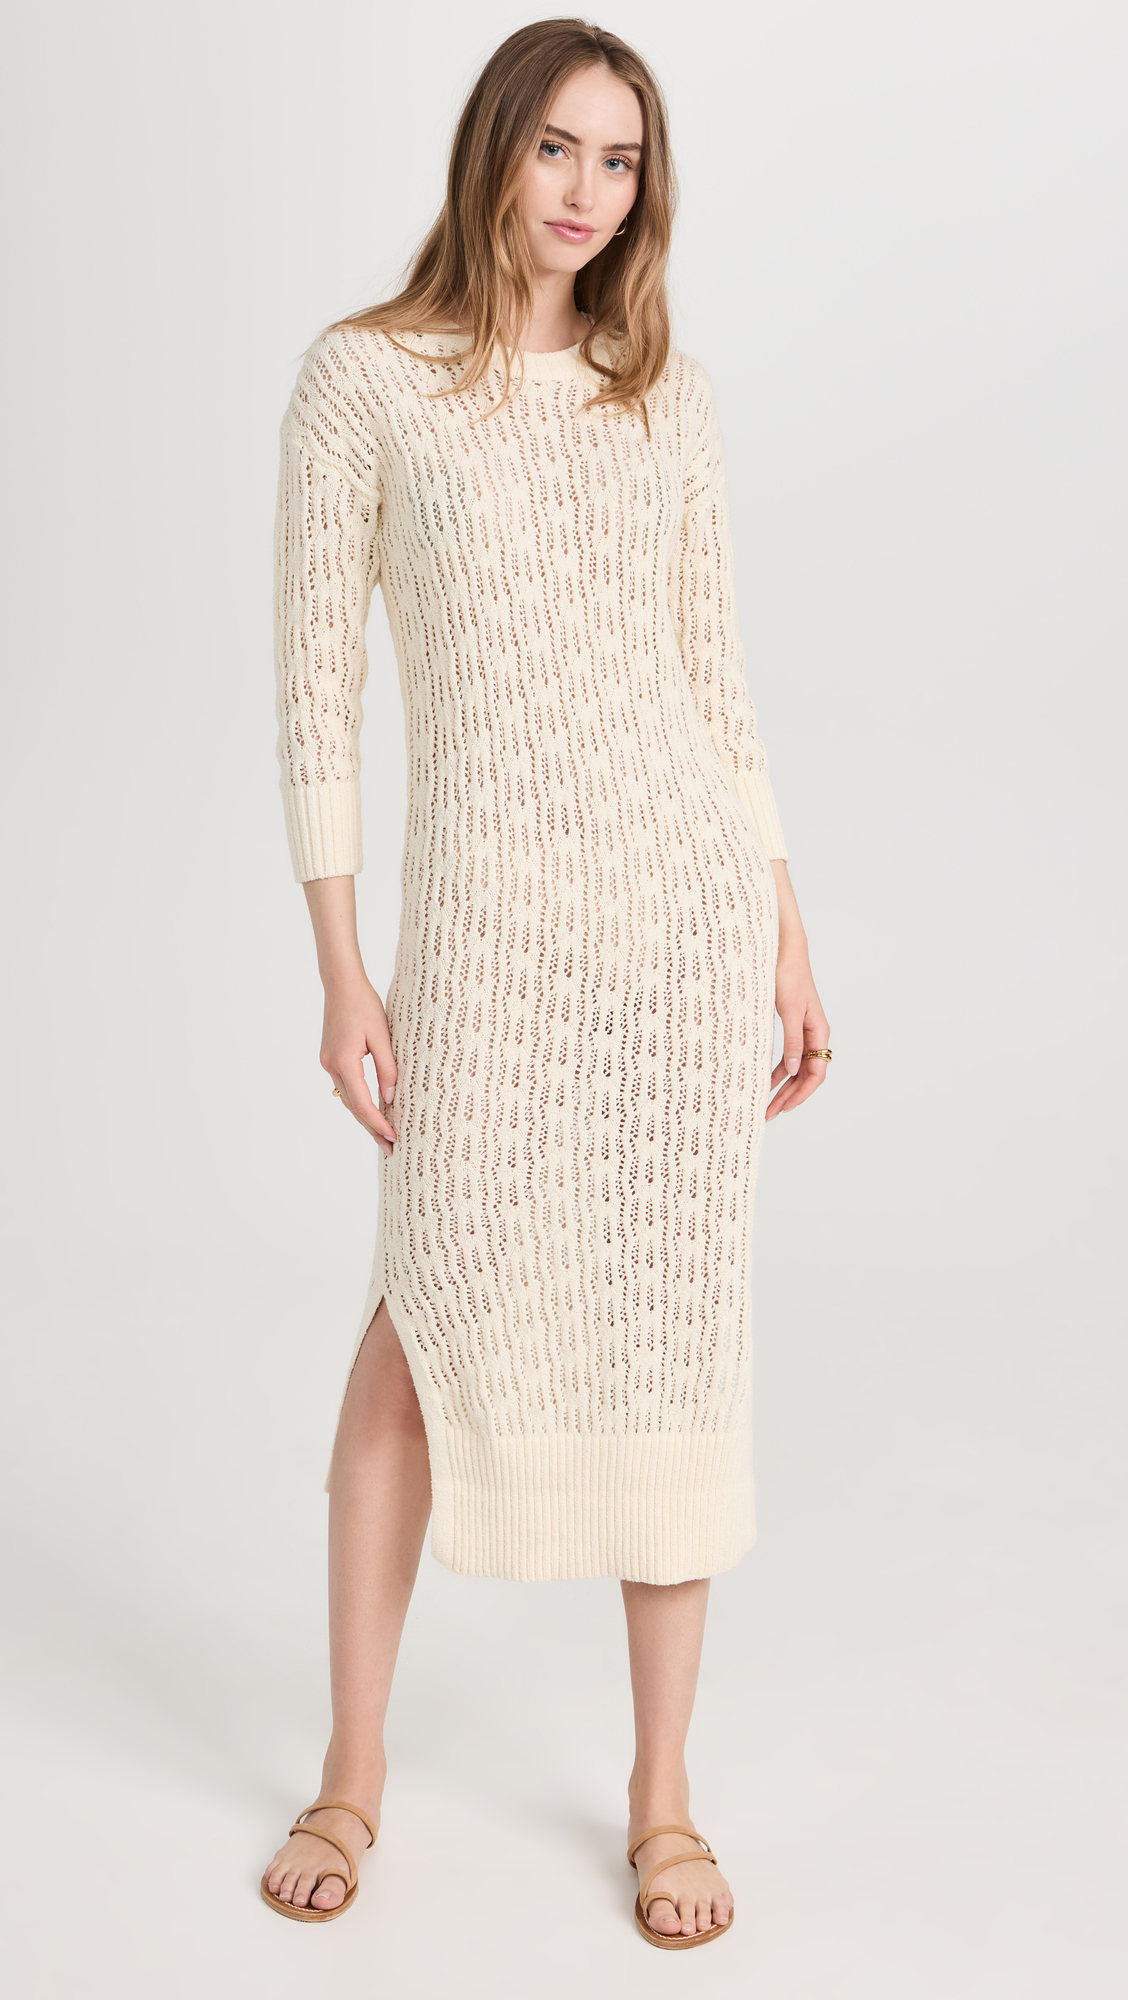 Dakota Johnson's Maxi Dress Just Inspired My New Purchase | Who What Wear